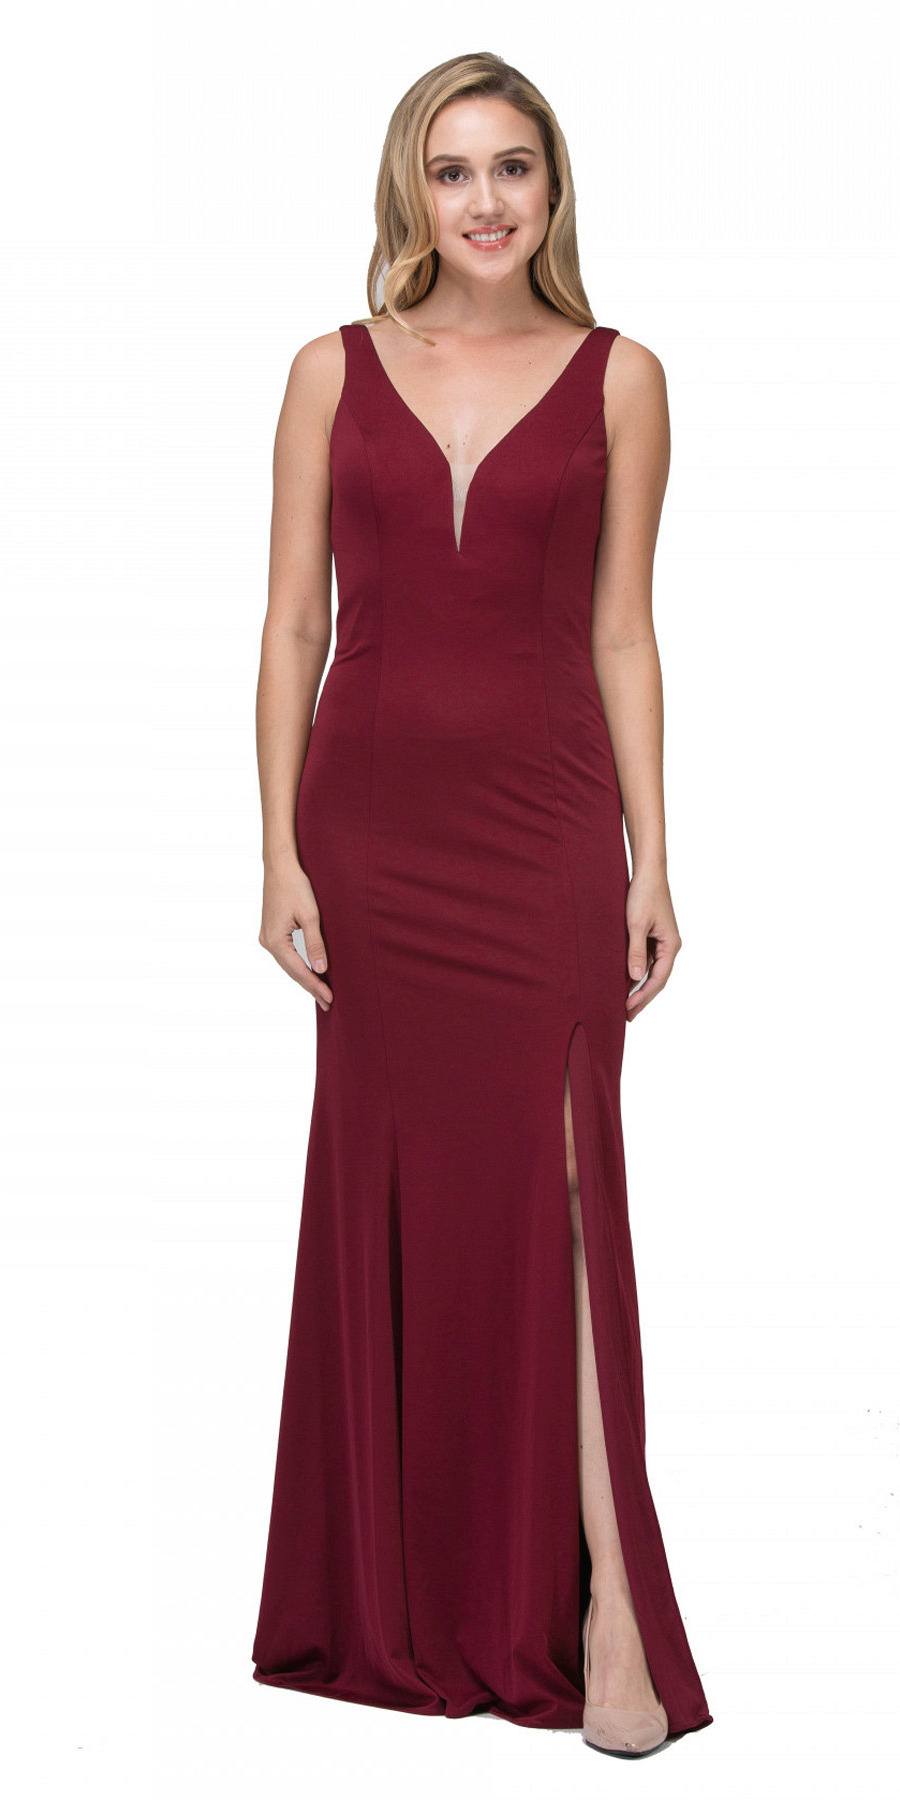 Starbox USA 17213 Burgundy V-Neck ITY Long Formal Dress with Slit